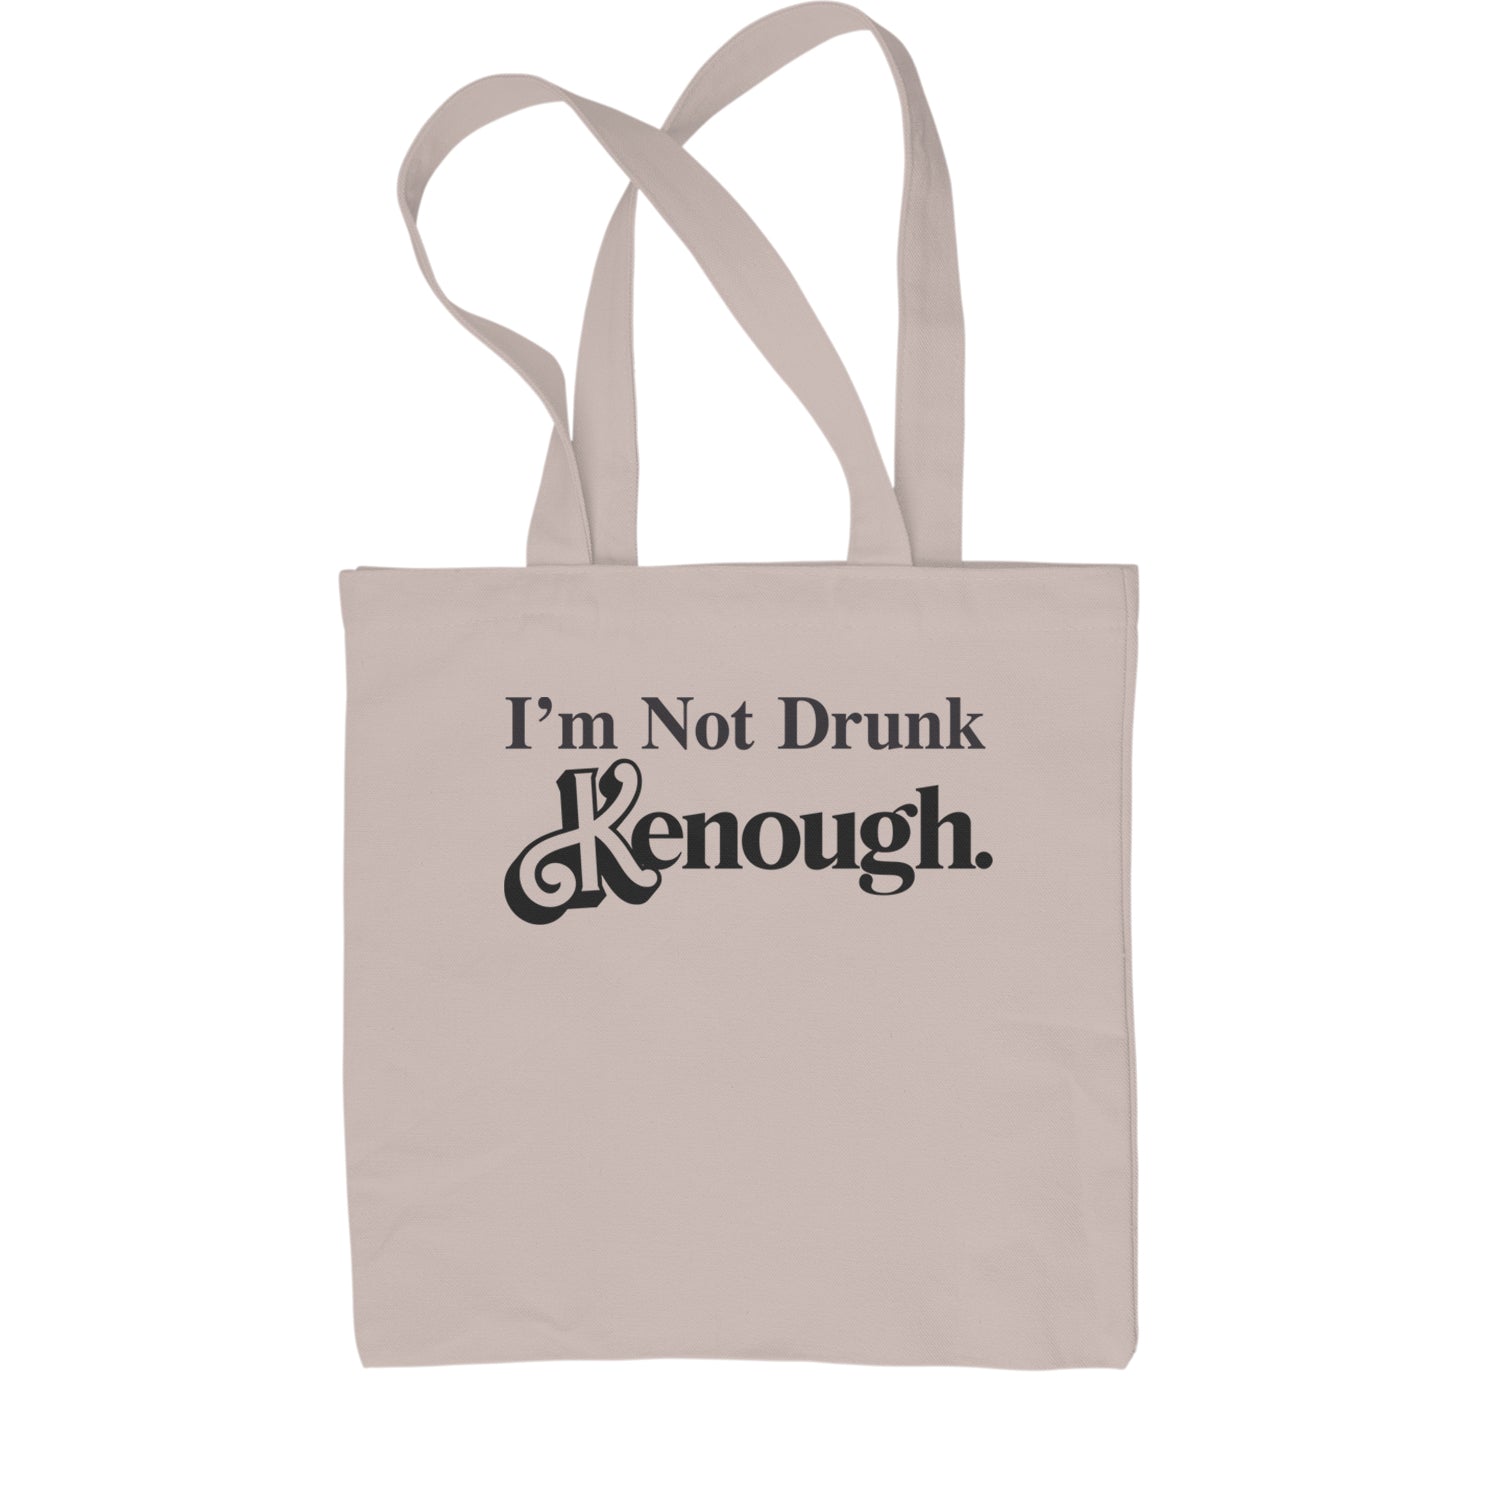 I'm Not Drunk Kenough Barbenheimer Shopping Tote Bag